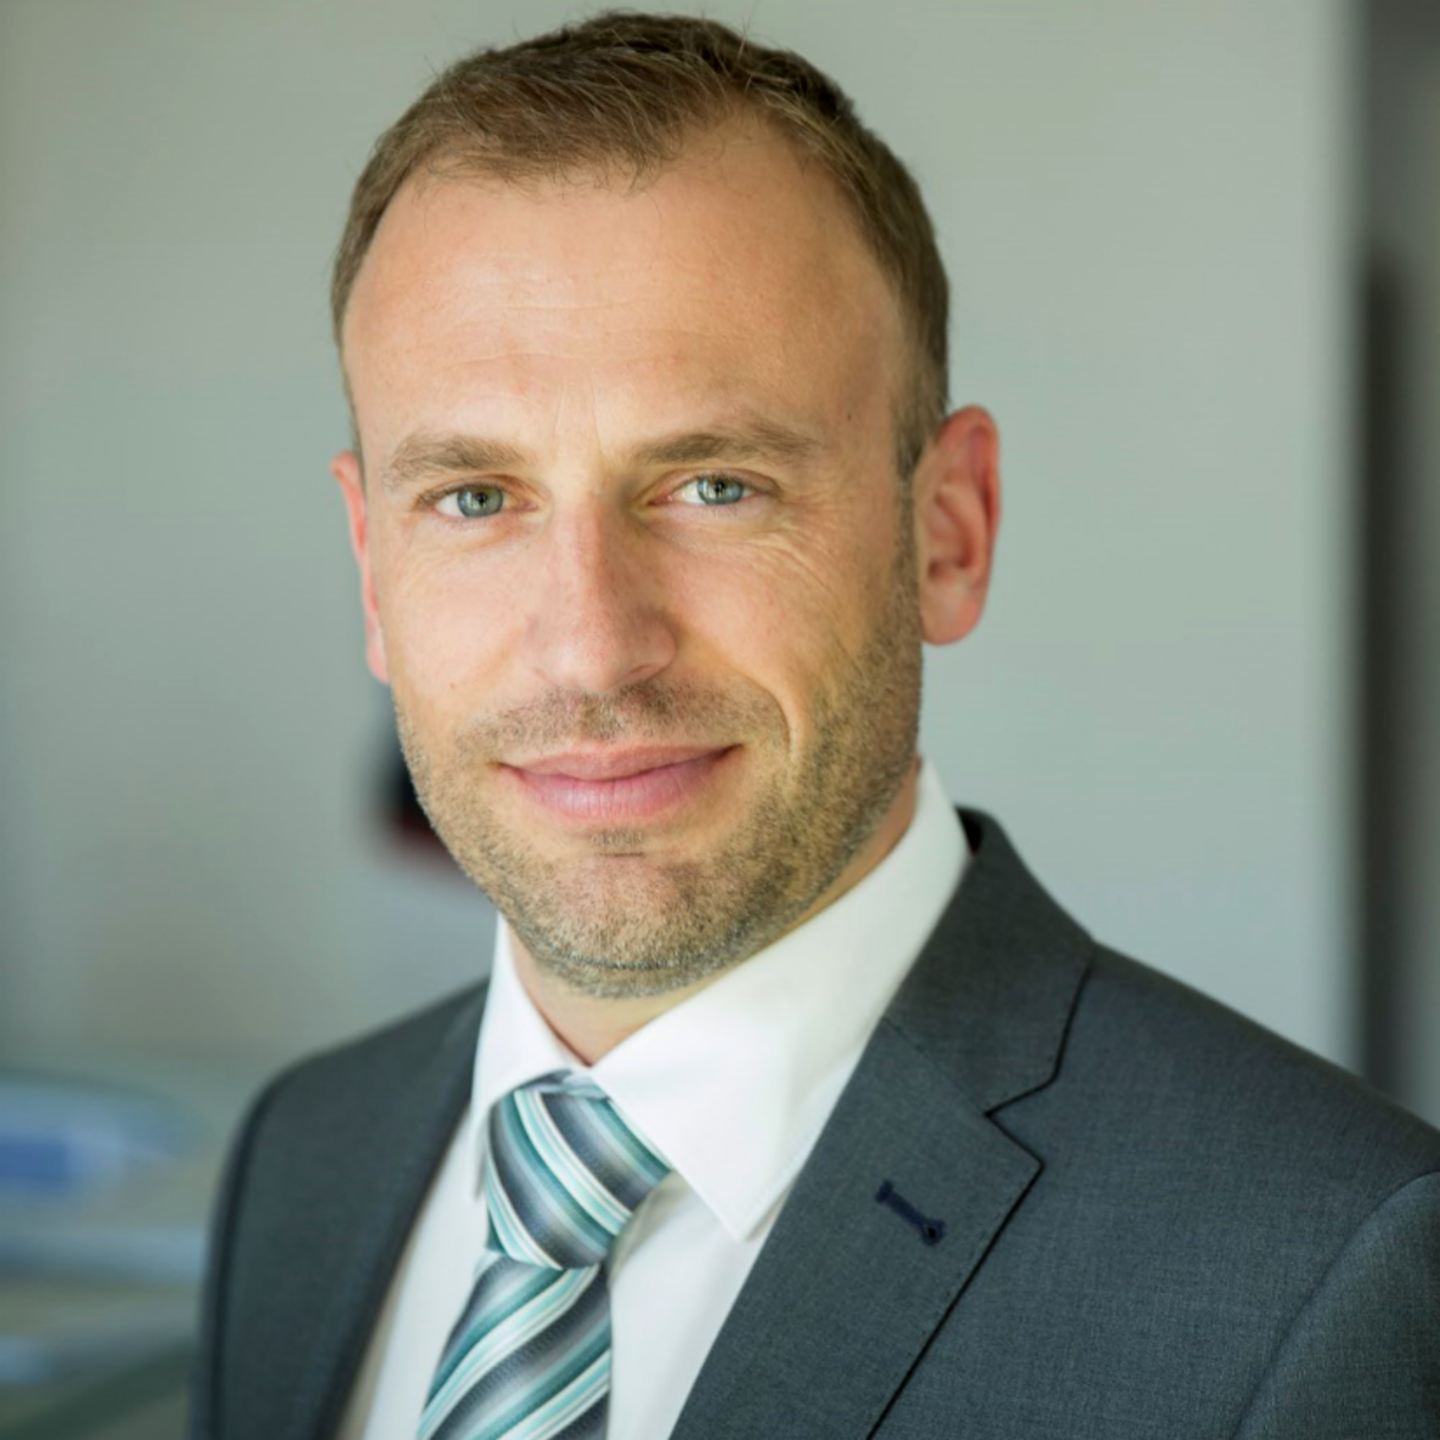 Secured debt purchase at EOS: Bernhard Melischnig, Managing Director at EOS Croatia